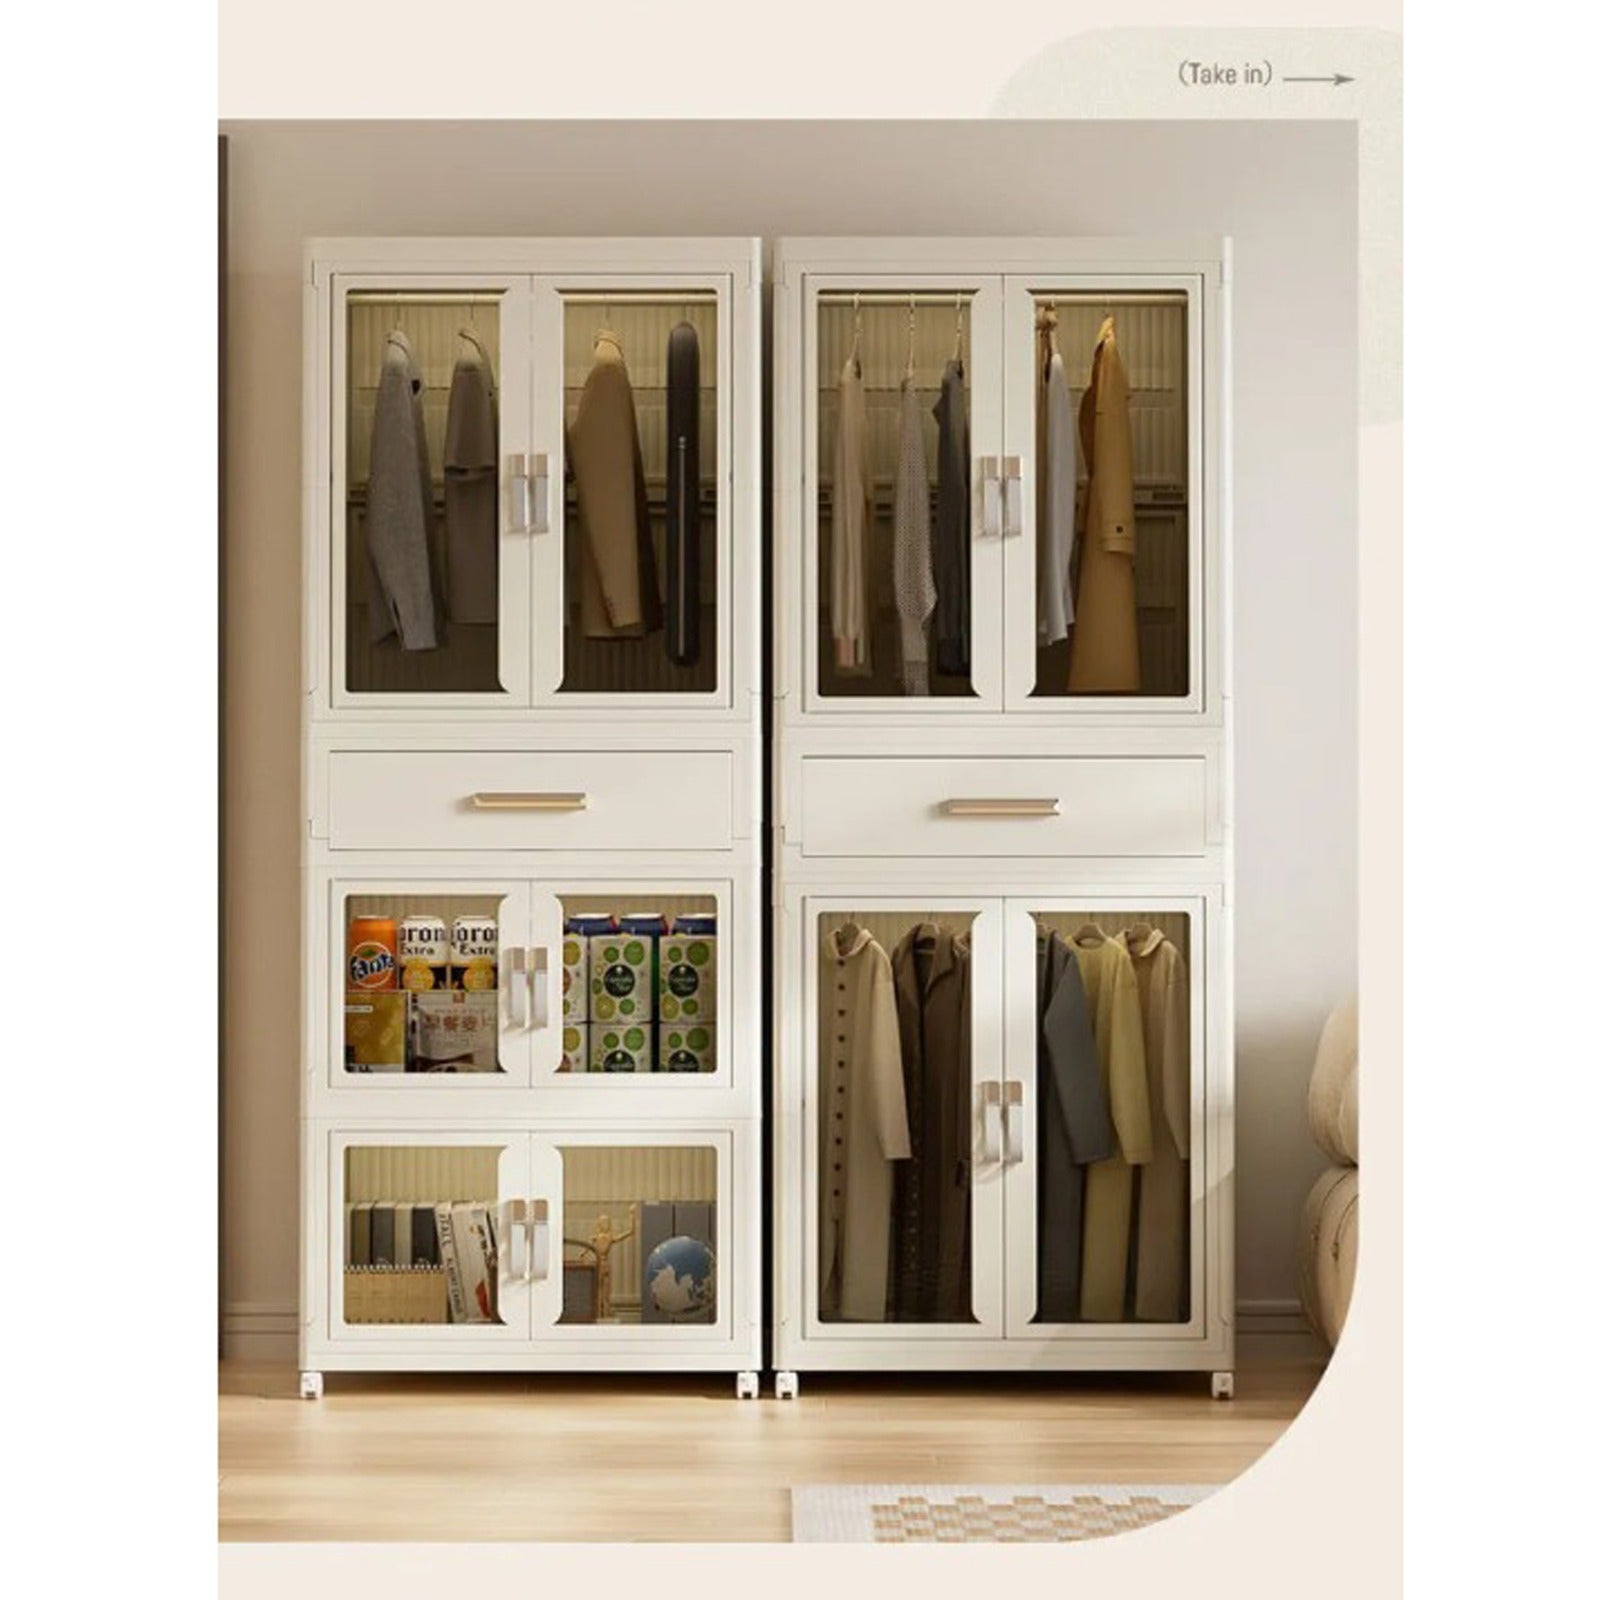 Foldable Wardrobe Cabinet - Clothes Storage Organizer Closet with Hanging Rod